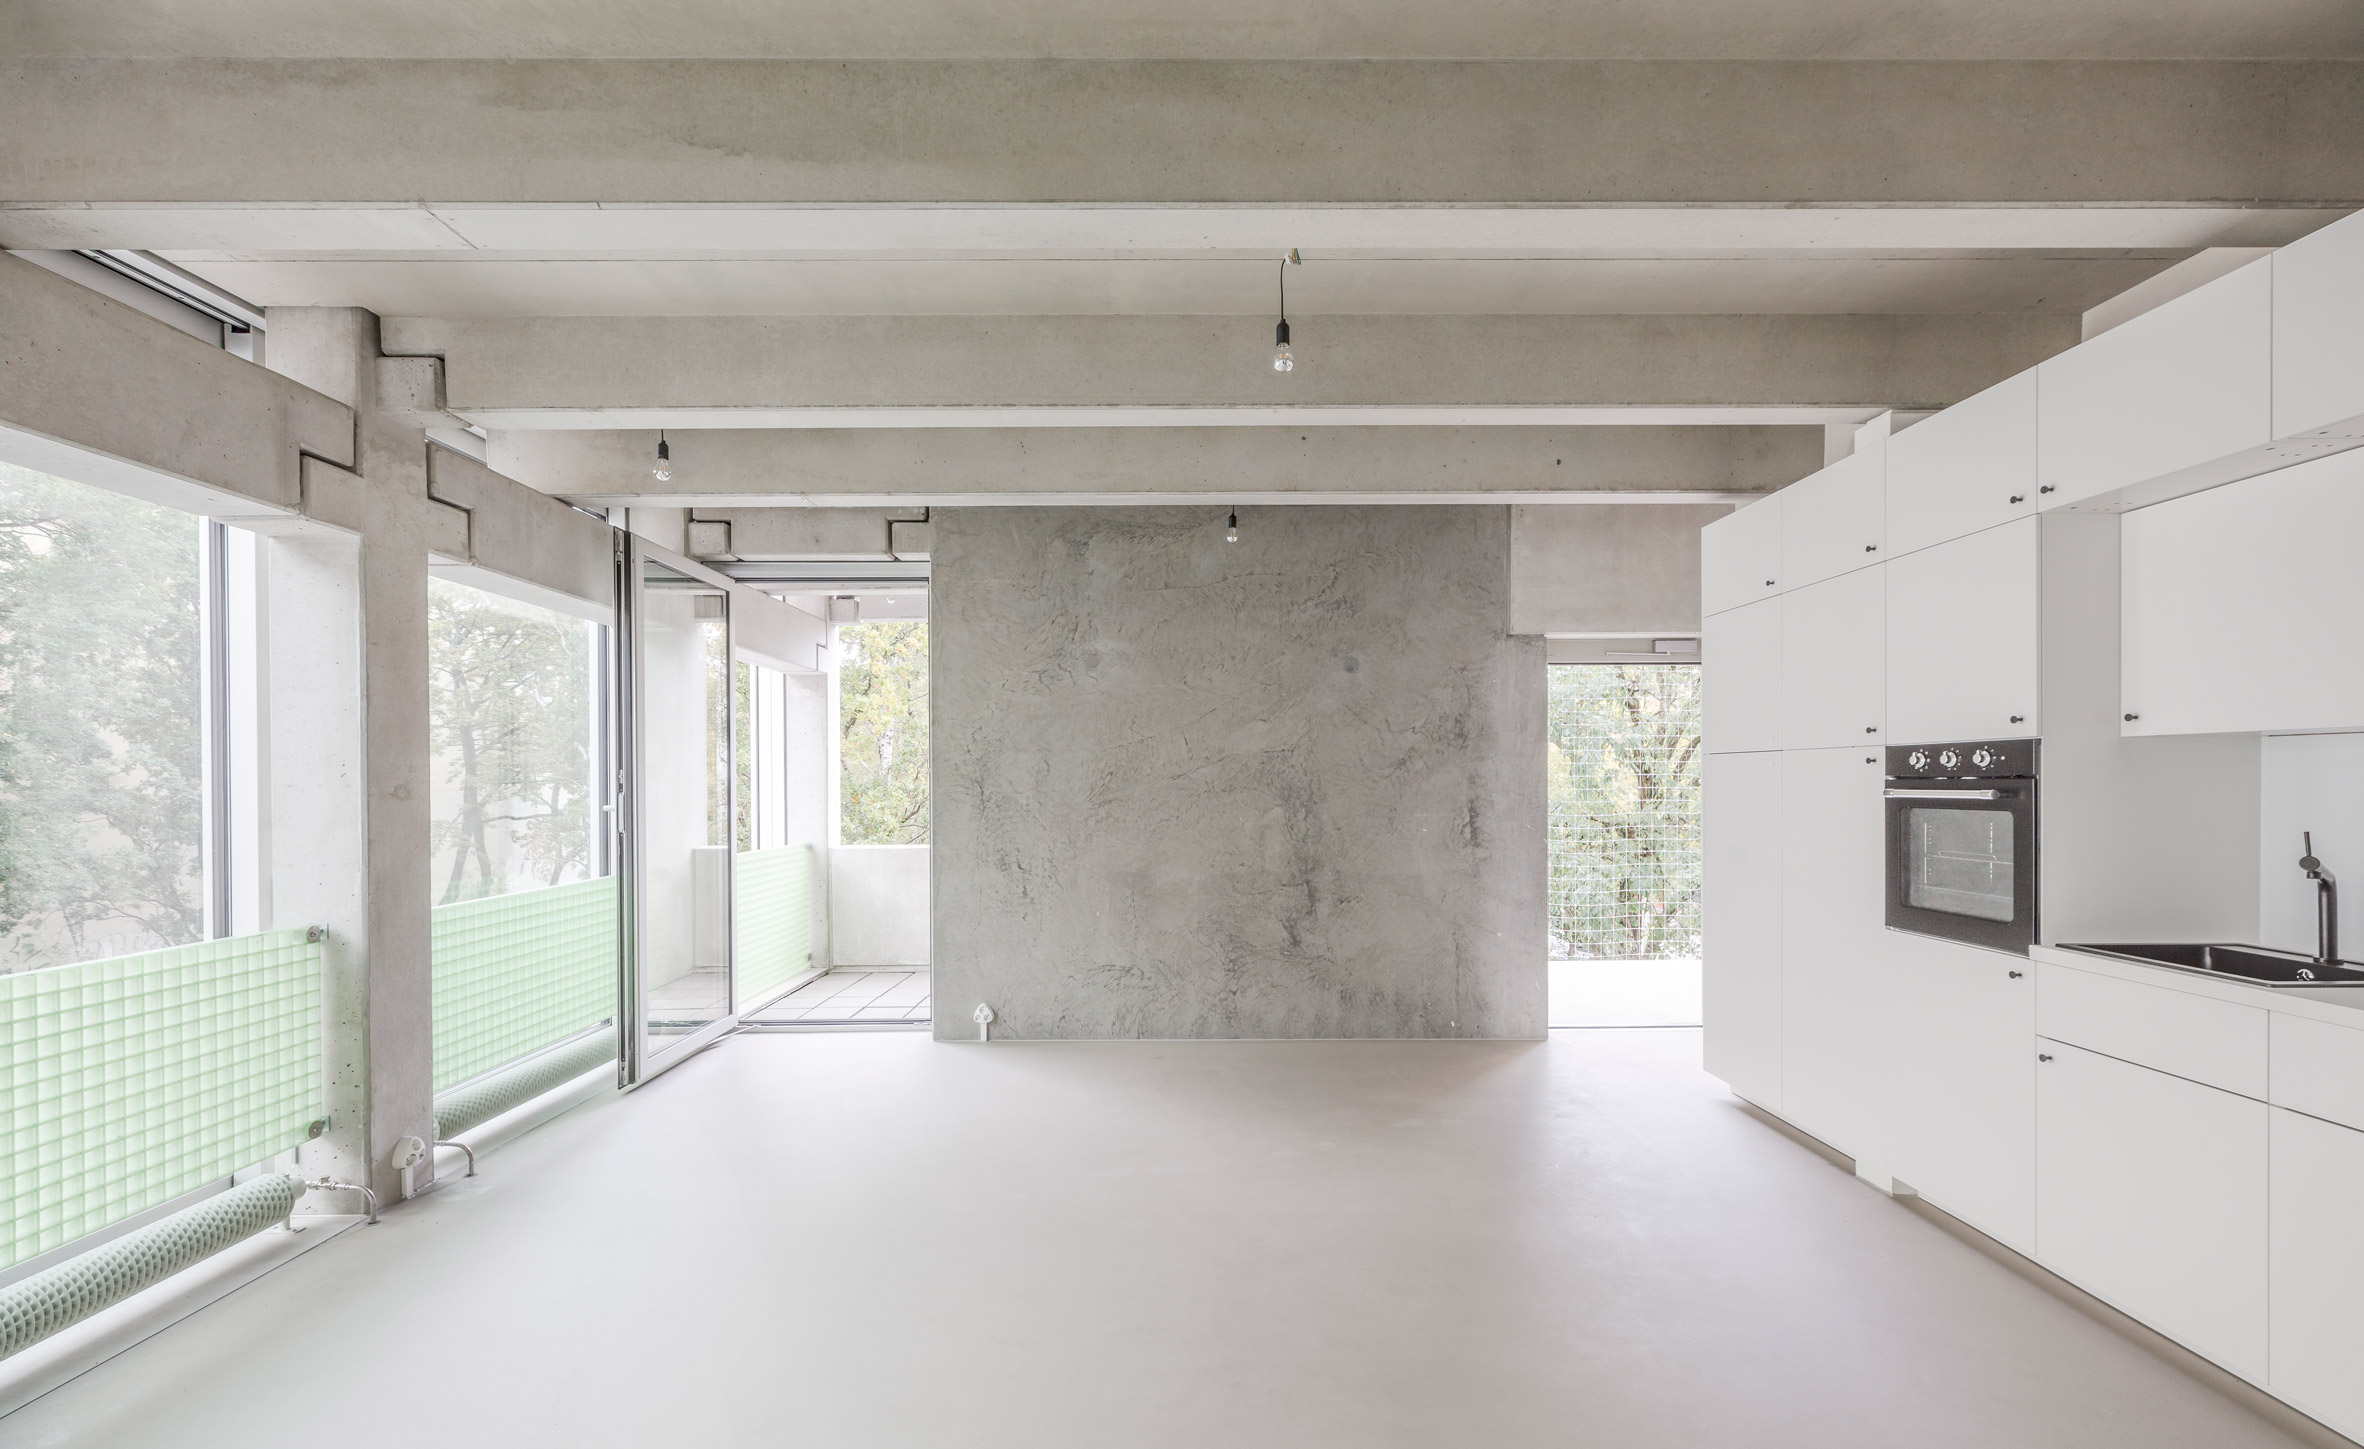 Interior walls of Wohnregal prefabricated concrete housing block by FAR in Berlin, Germany